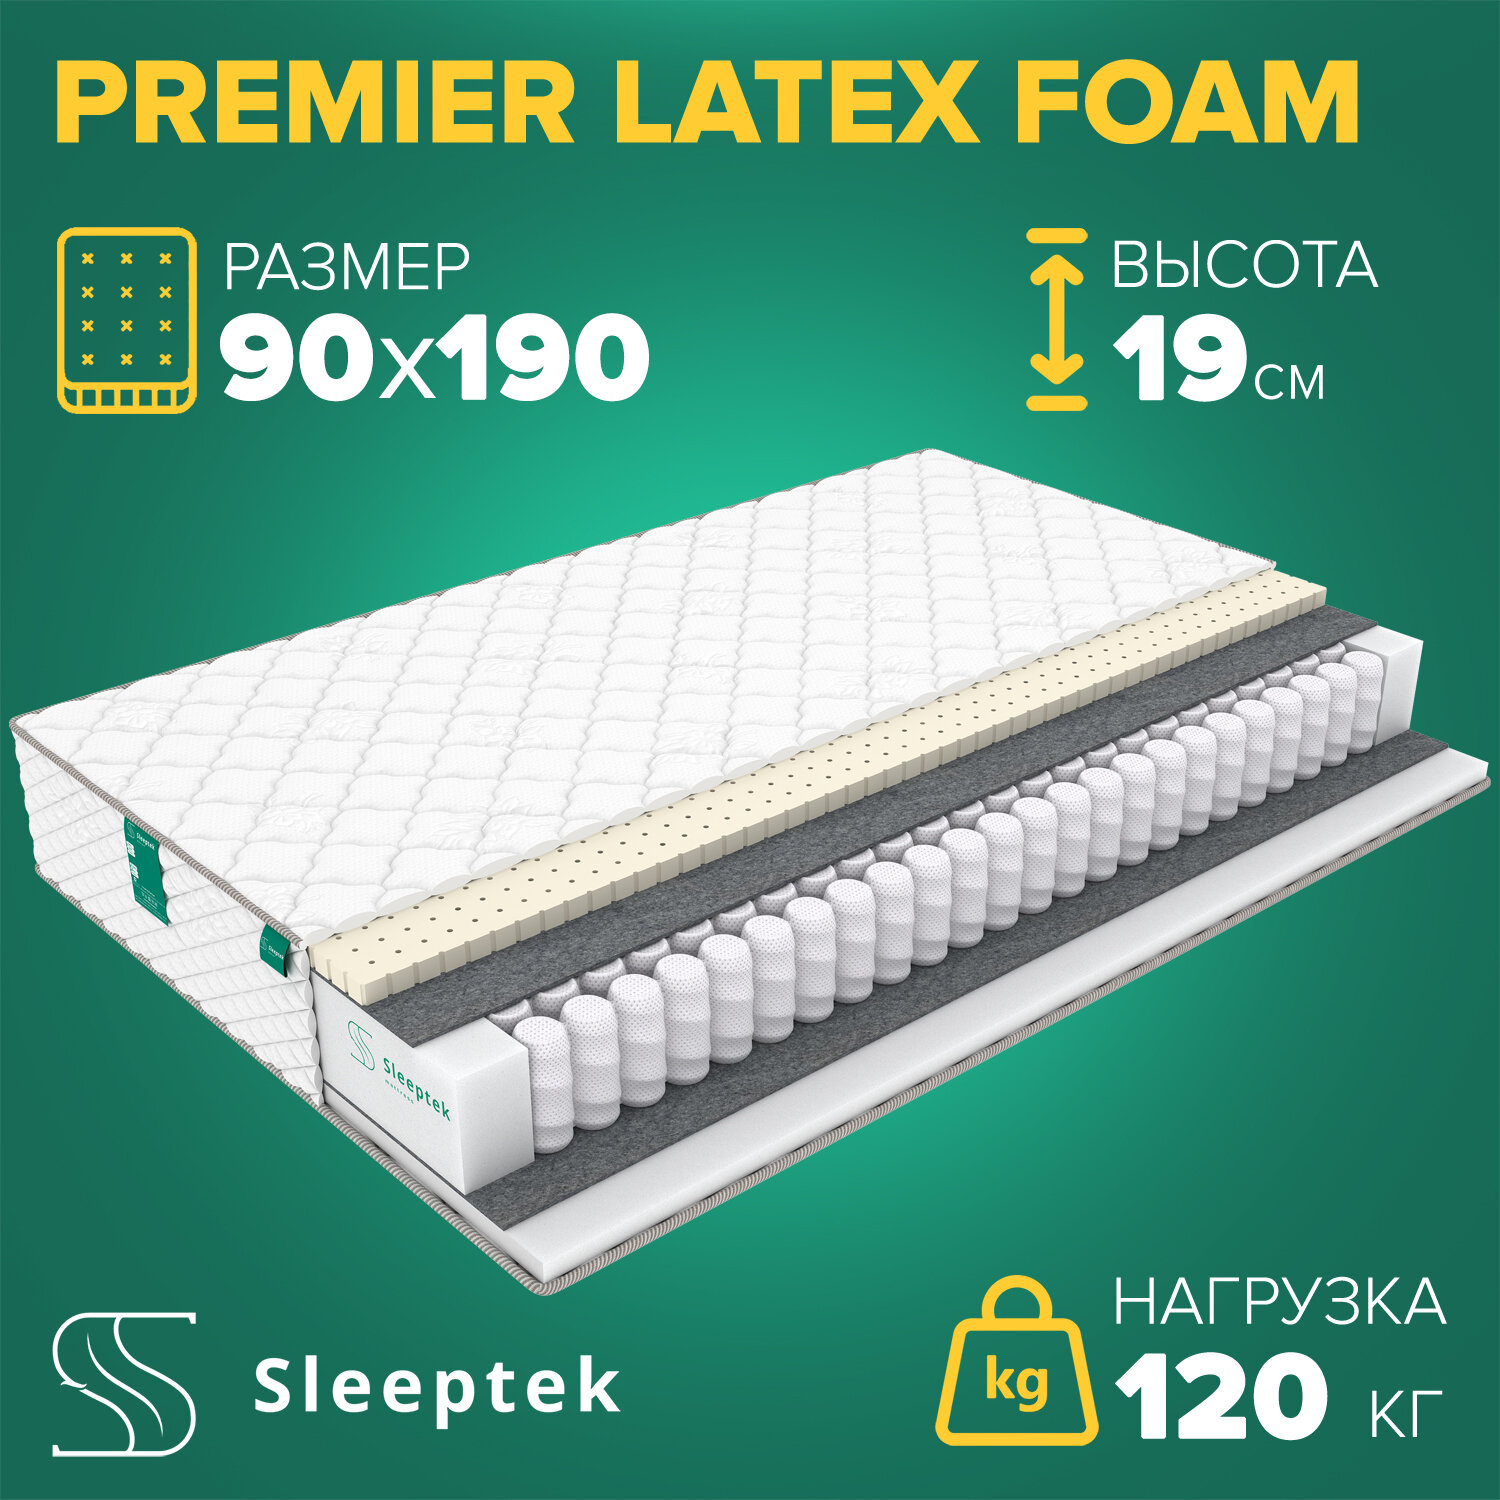  Sleeptek Premier Latex Foam 90190